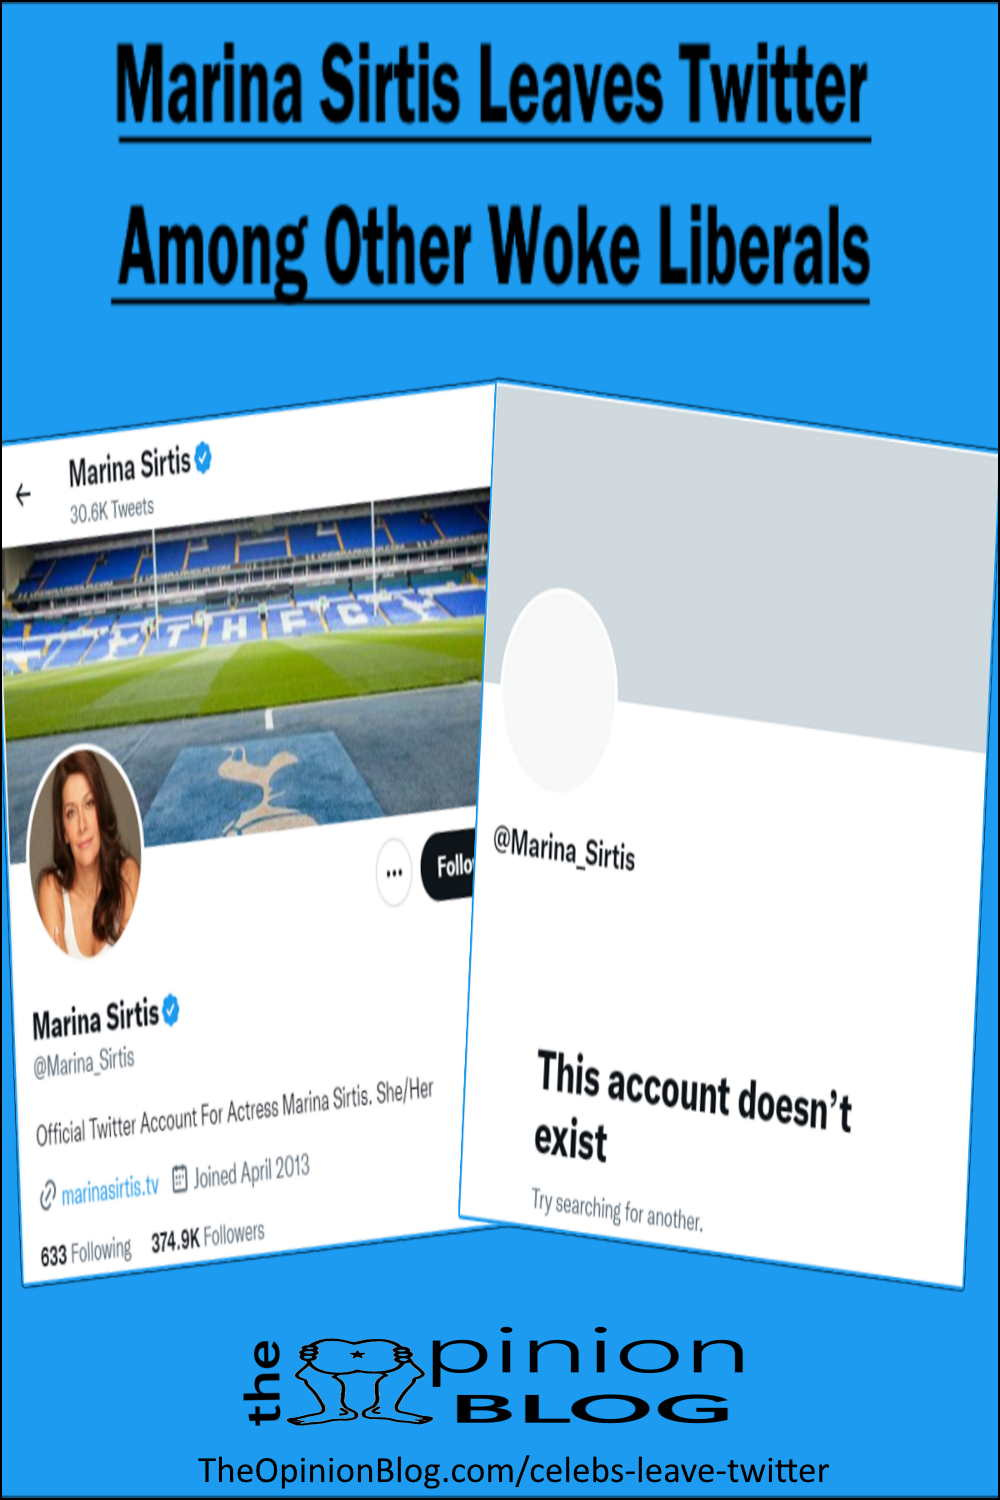 Pinterest Image - Marina Sirtis Leaves Twitter Among Other Woke Liberals